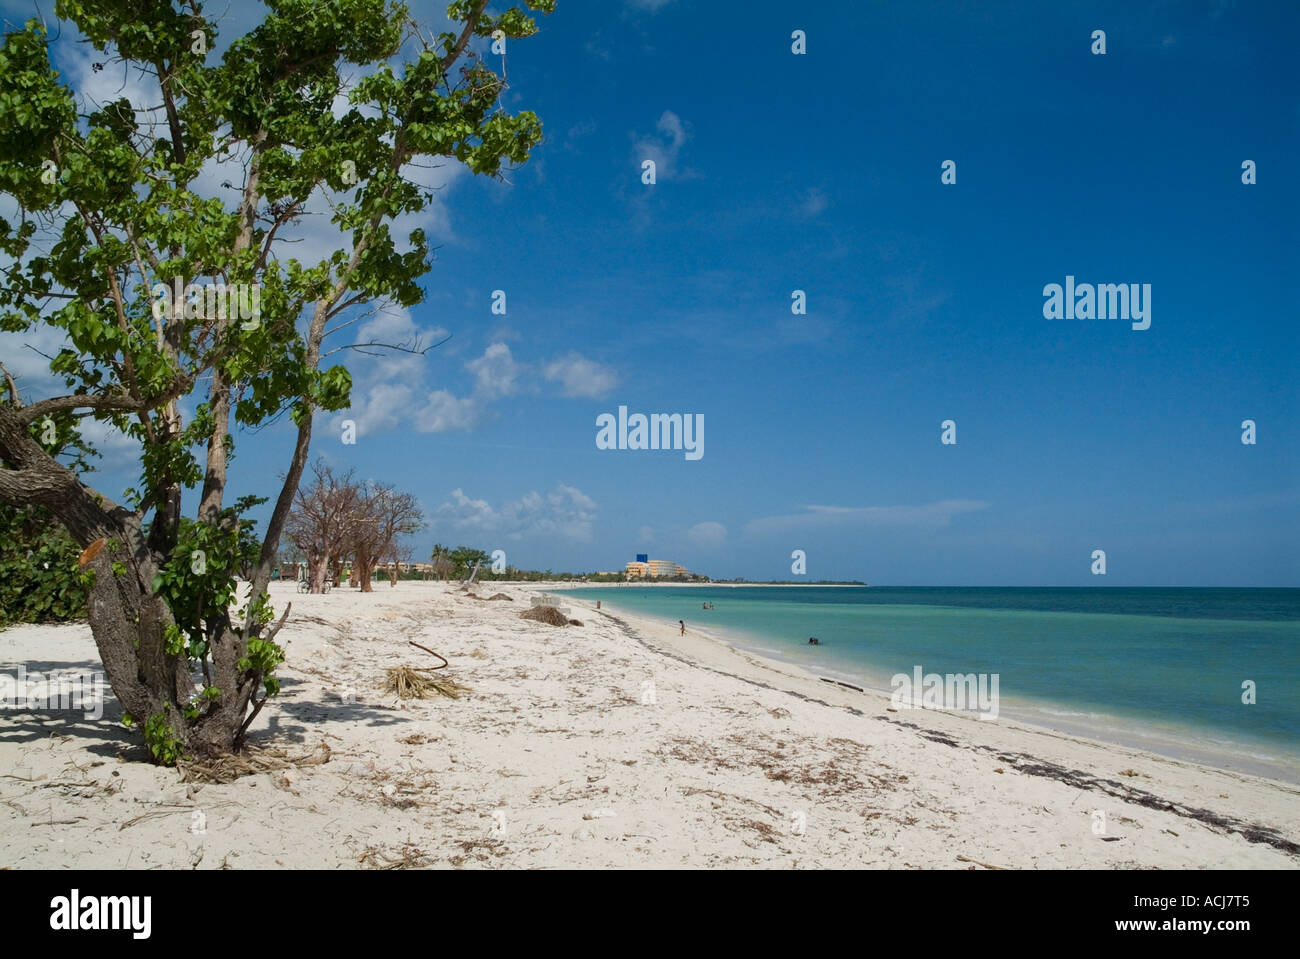 Spiaggia di sabbia bianca e splendide acque a Playa Ancon, vicino a Trinidad, Cuba. Foto Stock